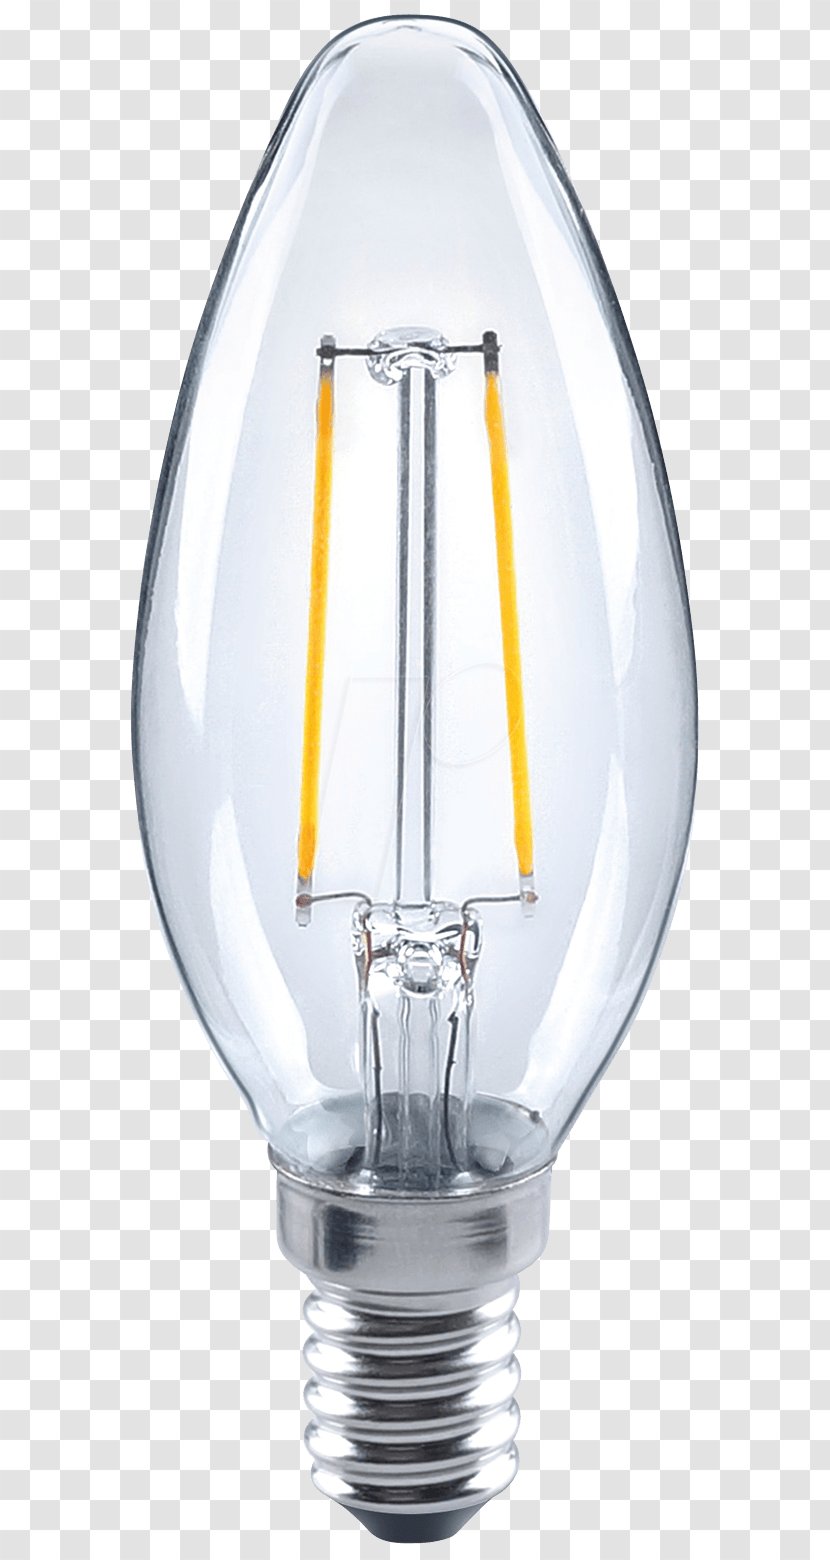 Incandescent Light Bulb Edison Screw LED Filament Lamp - Bayonet Mount Transparent PNG